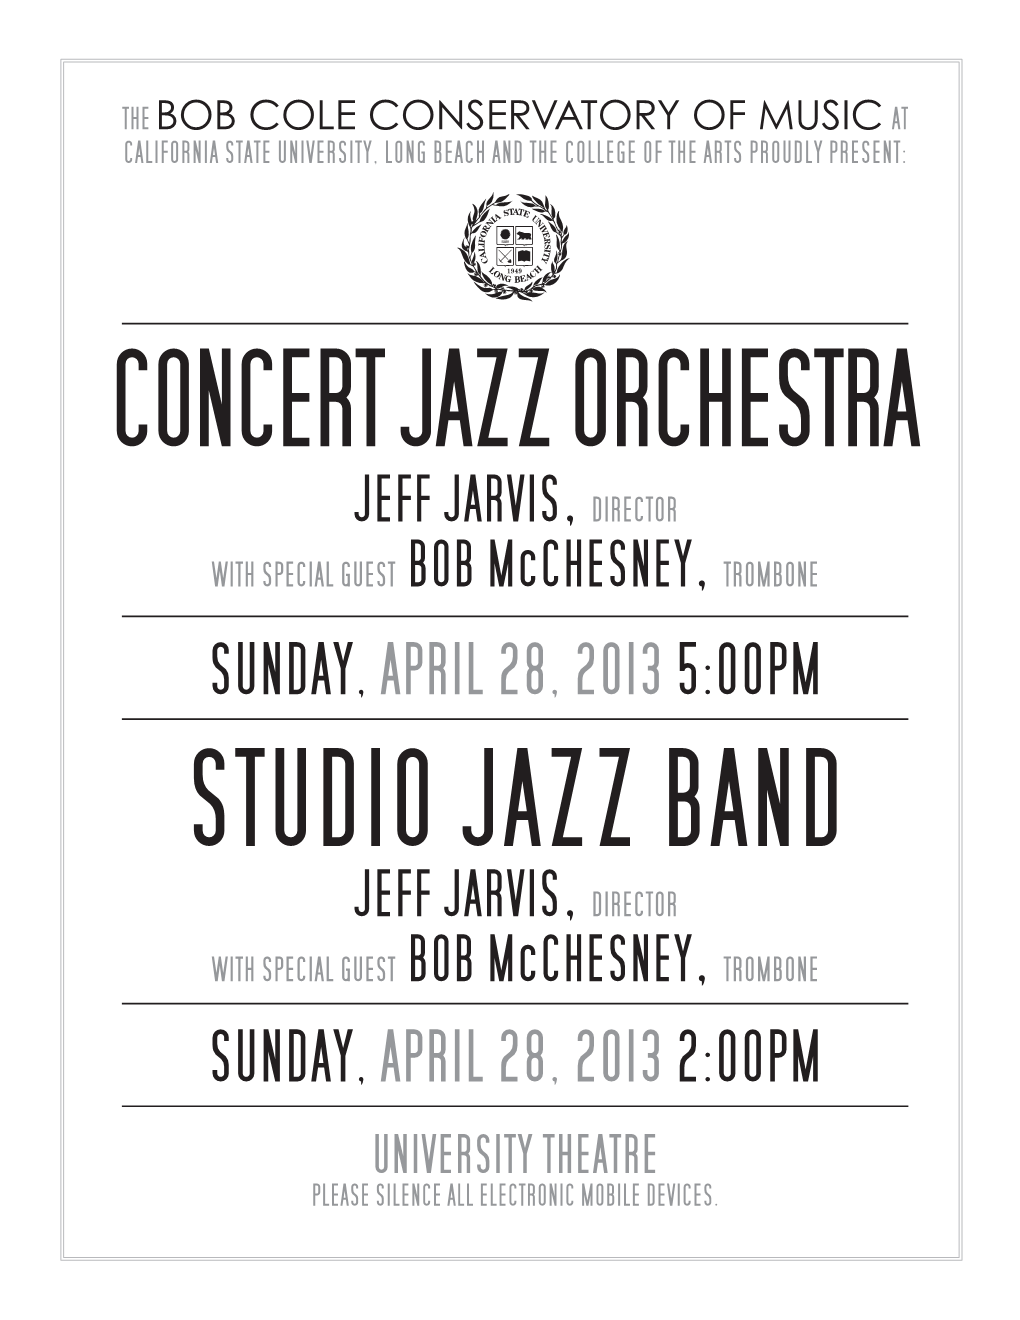 Concert Jazz Orchestra Studio Jazz Band